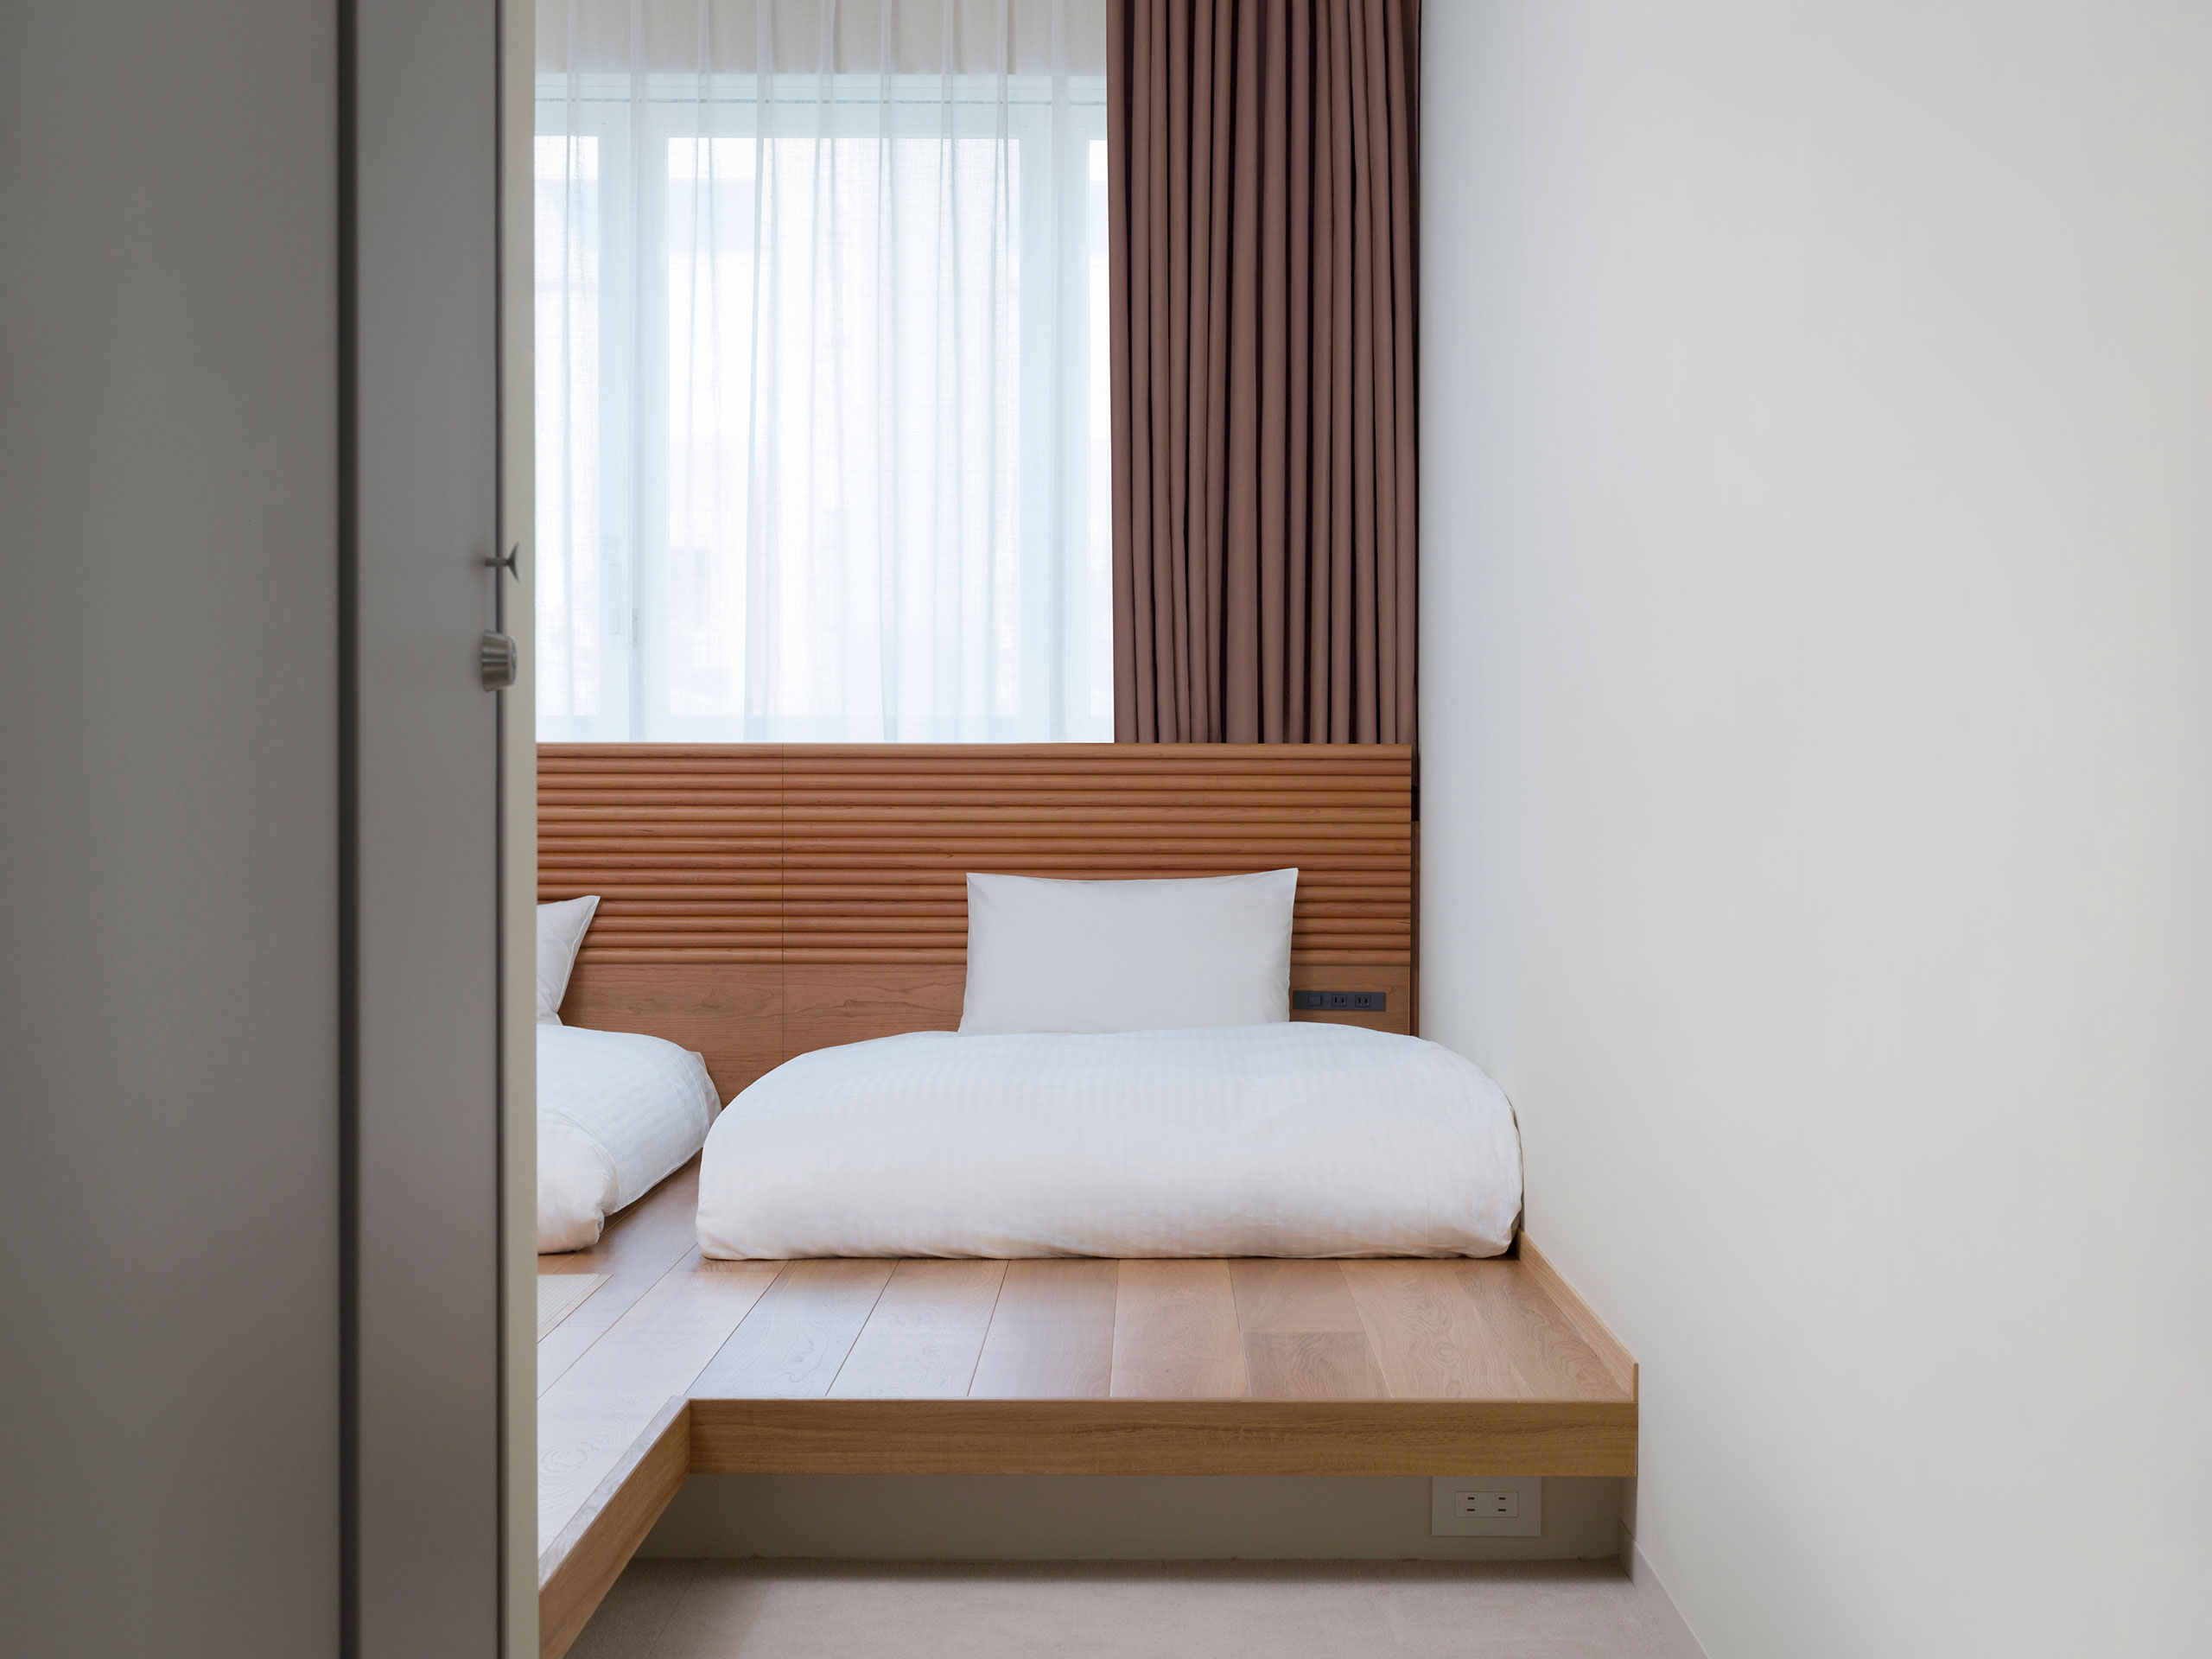 KIRO HIROSHIMA by THE SHARE HOTELS. Interior design by Hiroyuki Tanaka Architects.
Photography by Gottingham.